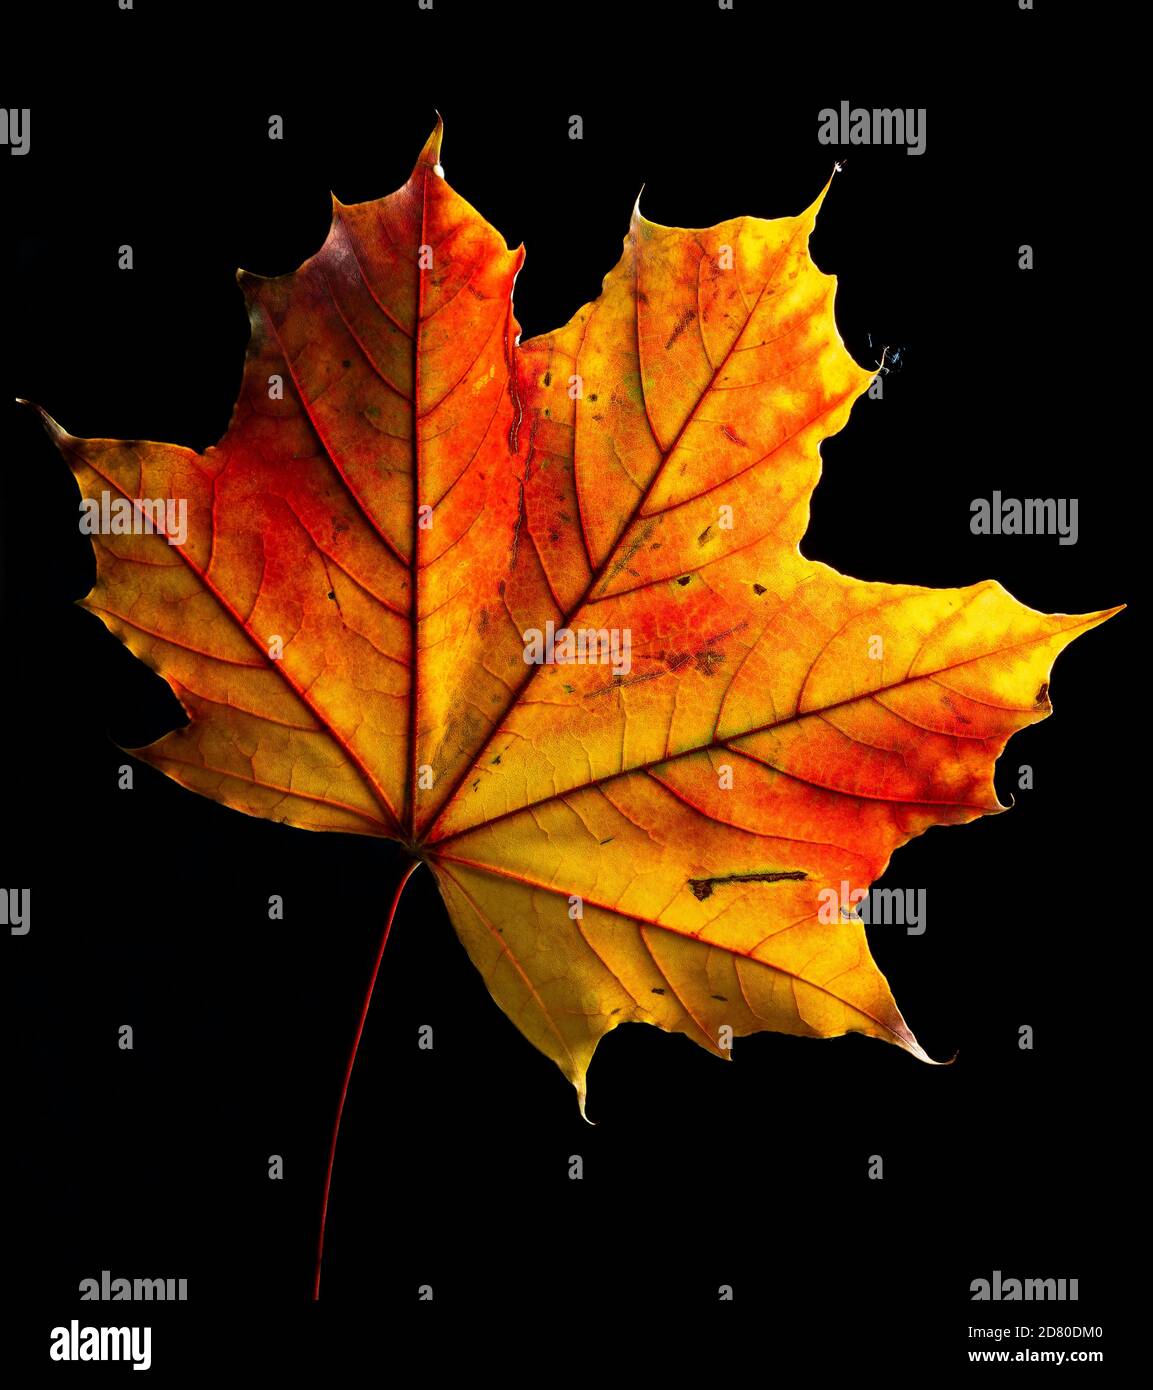 Autumn leaf on a black background Stock Photo